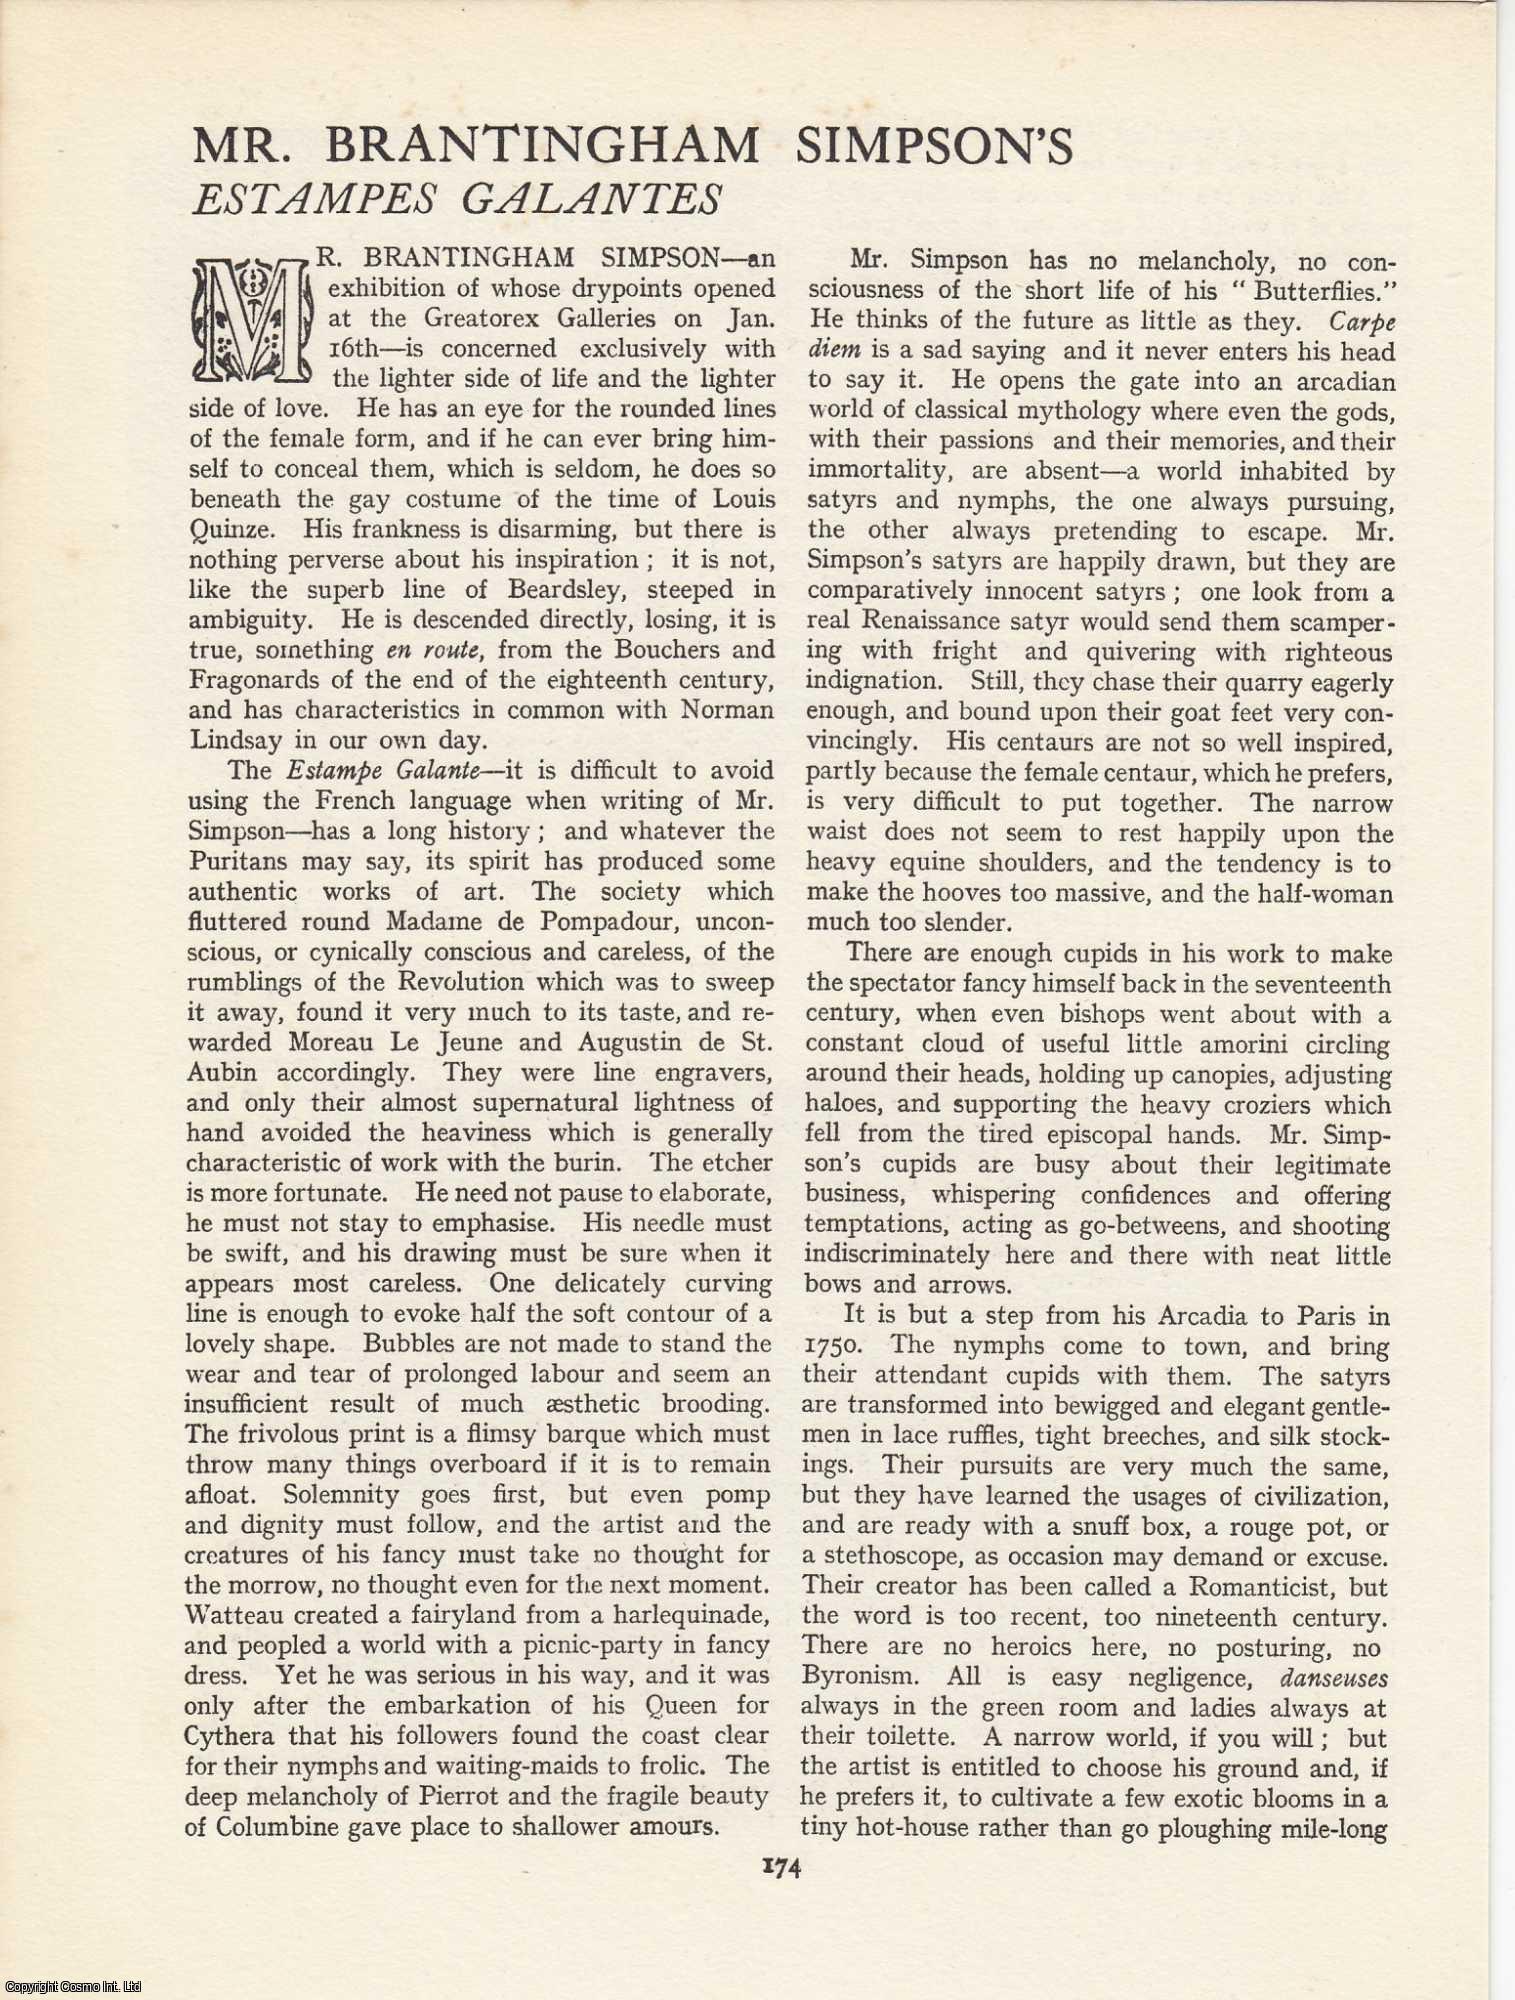 J.L. - Mr. Brantingham Simpson's Estampes Galantes. An original article from The Bookman's Journal.